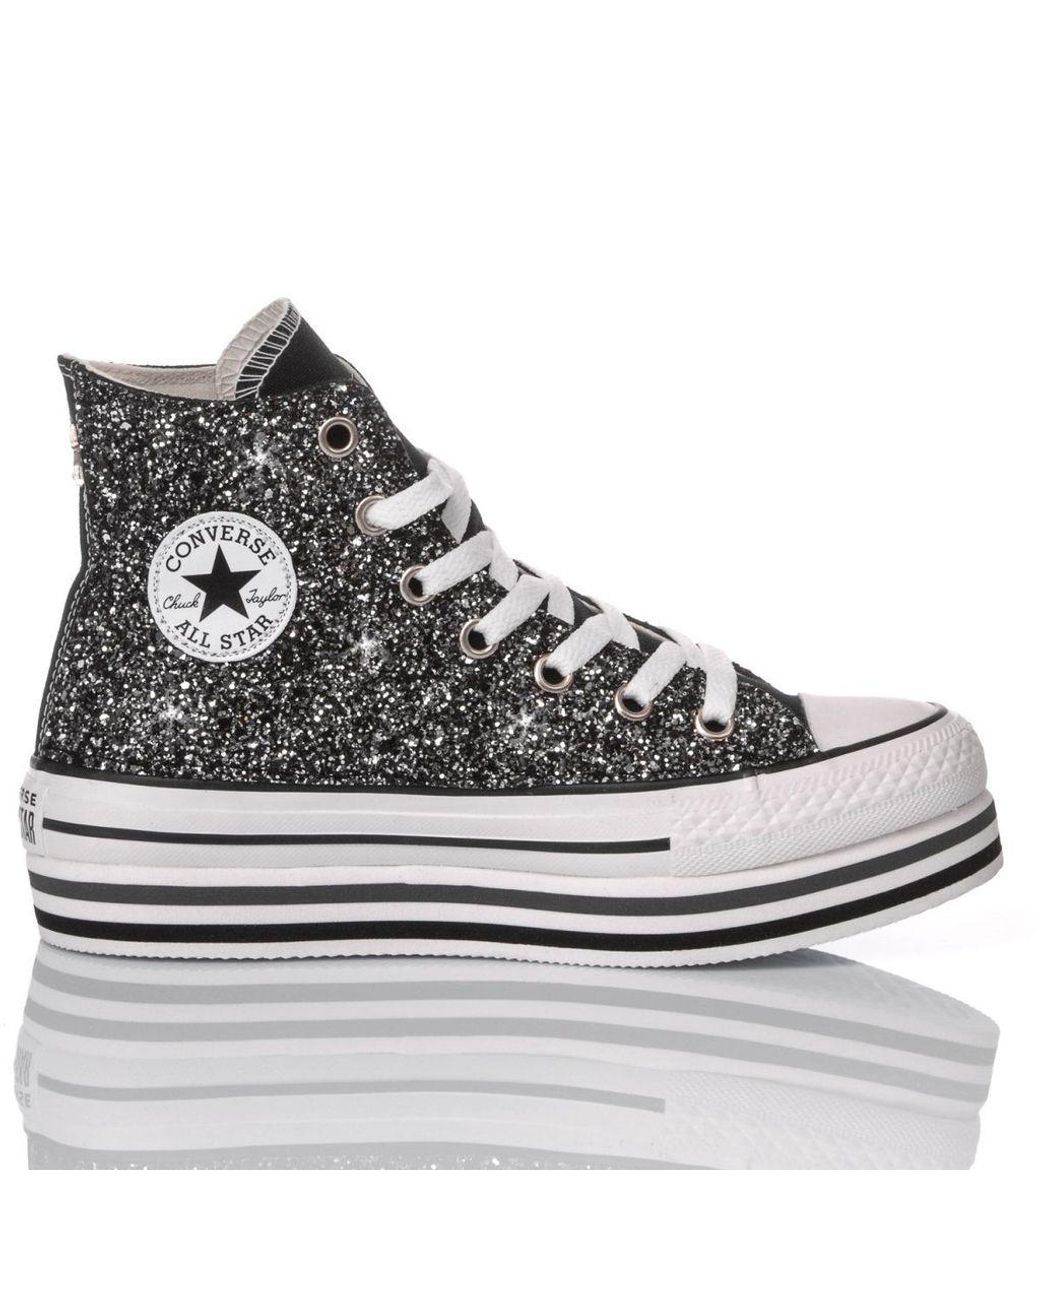 Converse Women's Mim589 Black Glitter Hi Top Sneakers - Lyst